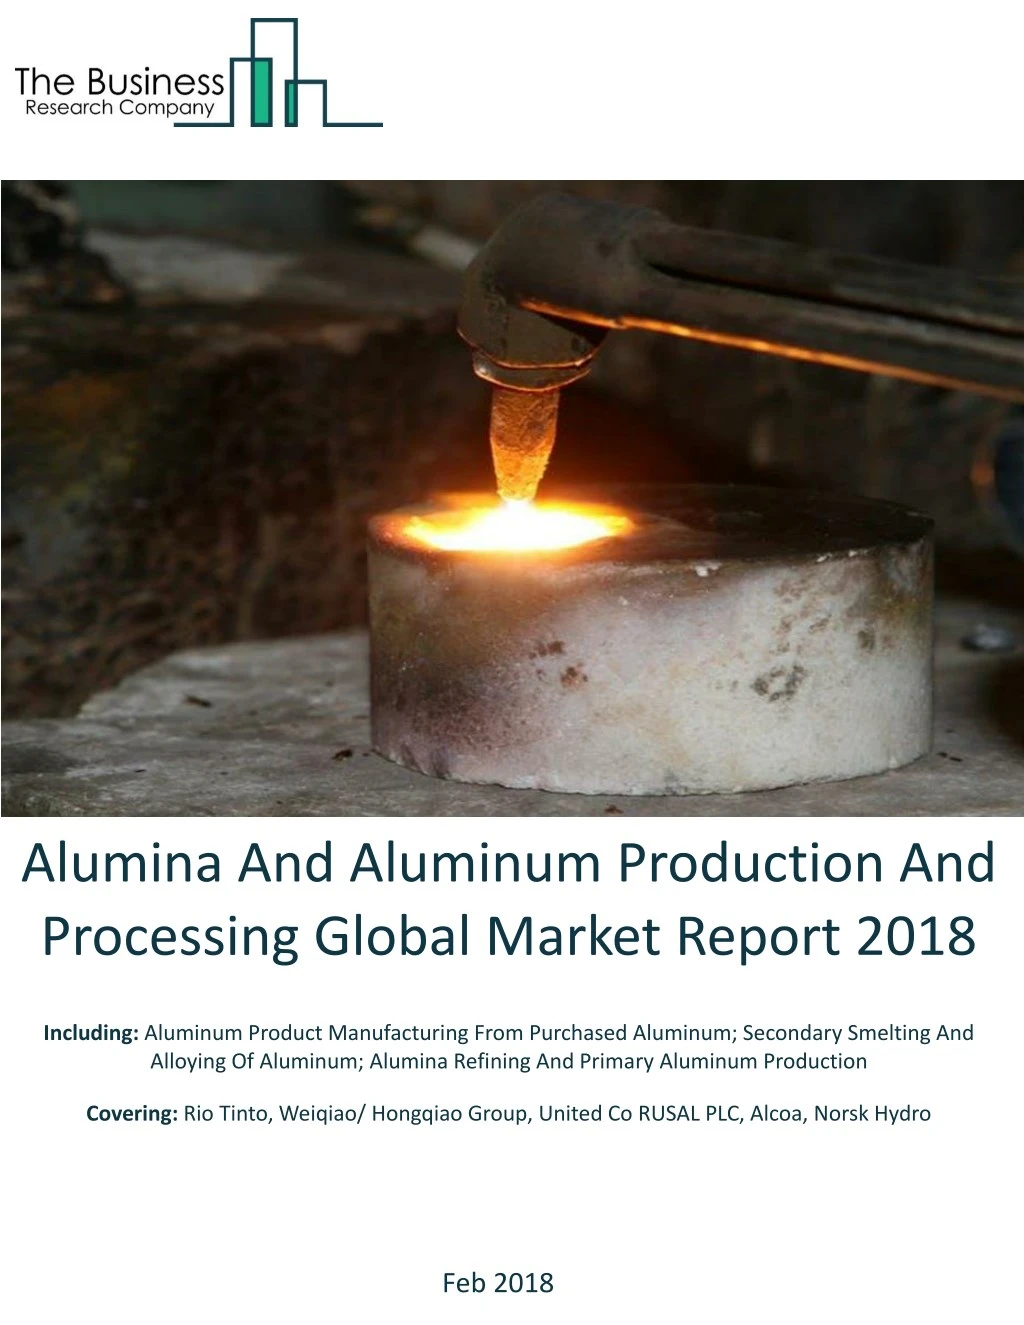 alumina and aluminum production and processing